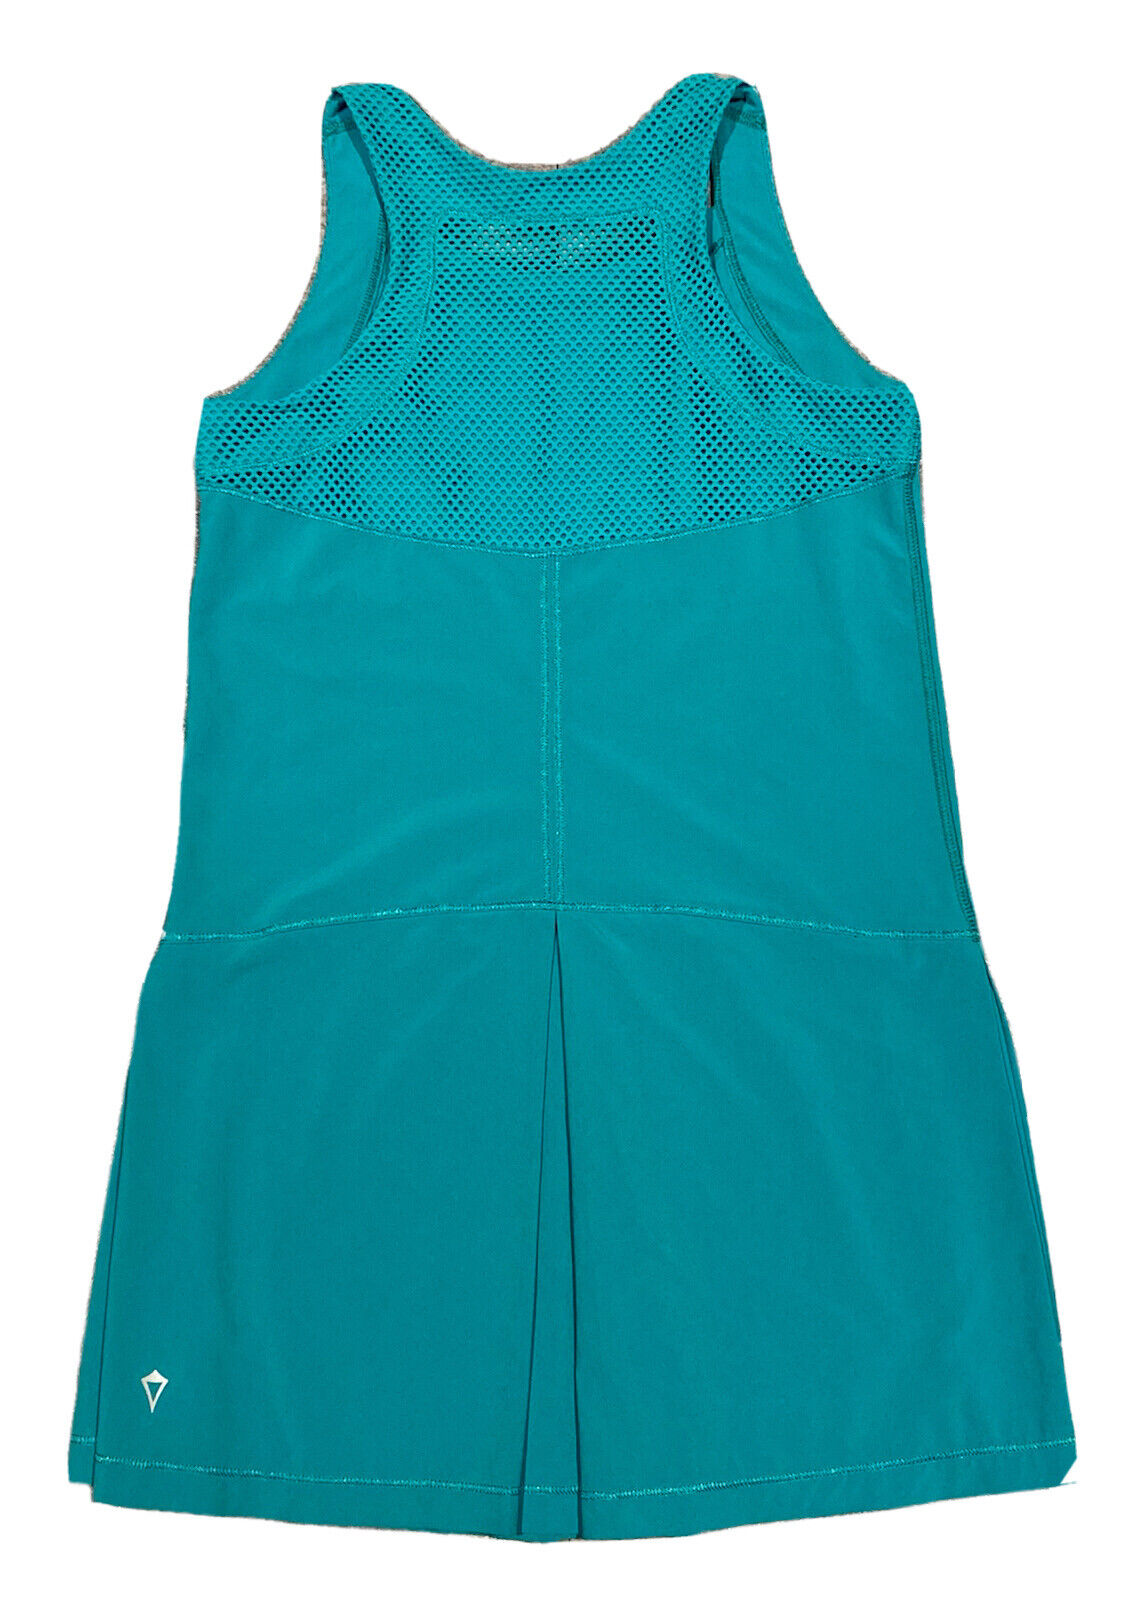 Lululemon Ivivva Athletic Sun Tennis Dress  Youth Girls 12  Teal Green  Mint!